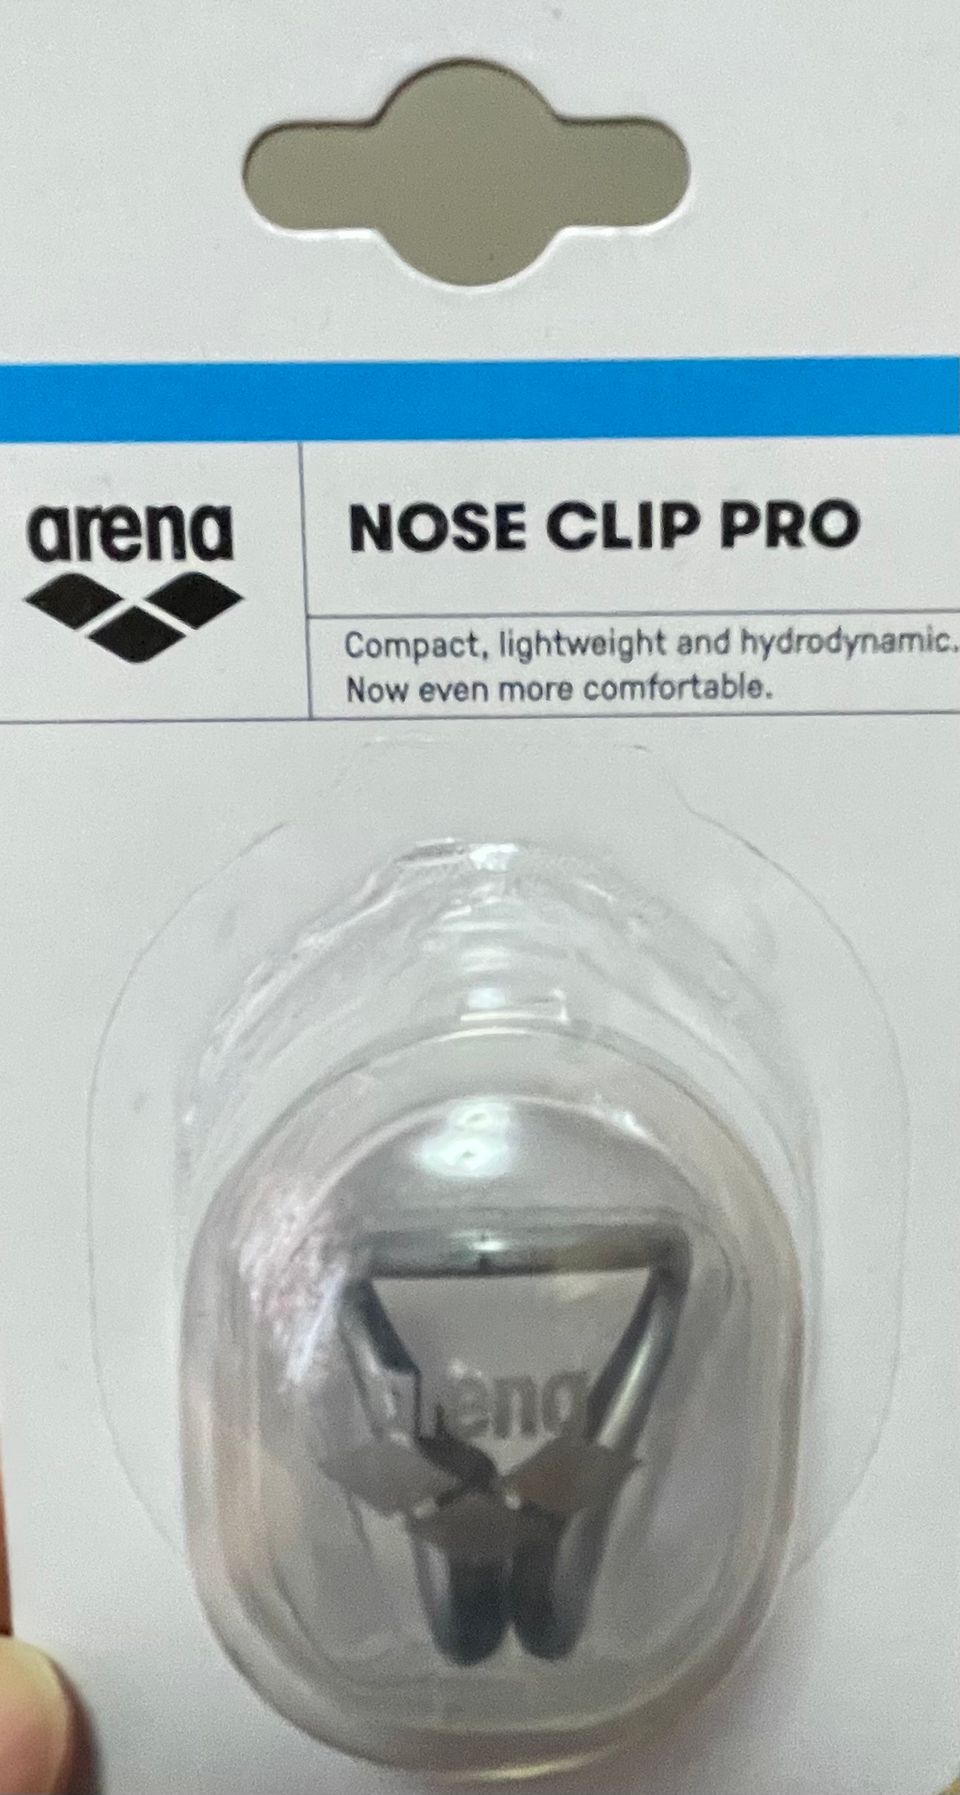 Arena nose clip pro